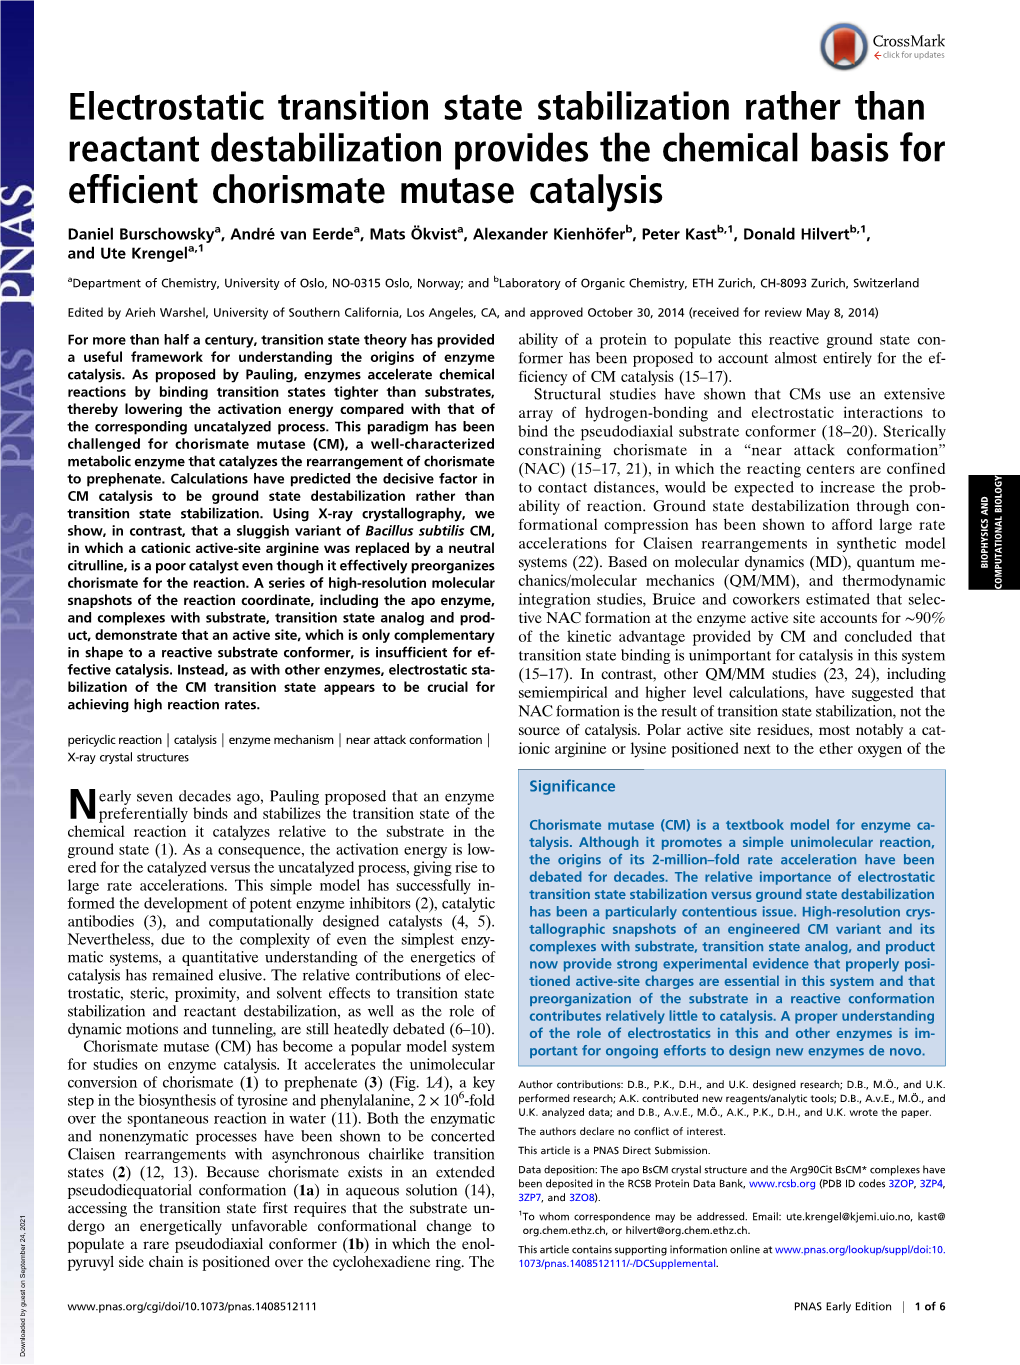 Electrostatic Transition State Stabilization Rather Than Reactant Destabilization Provides the Chemical Basis for Efficient Chorismate Mutase Catalysis